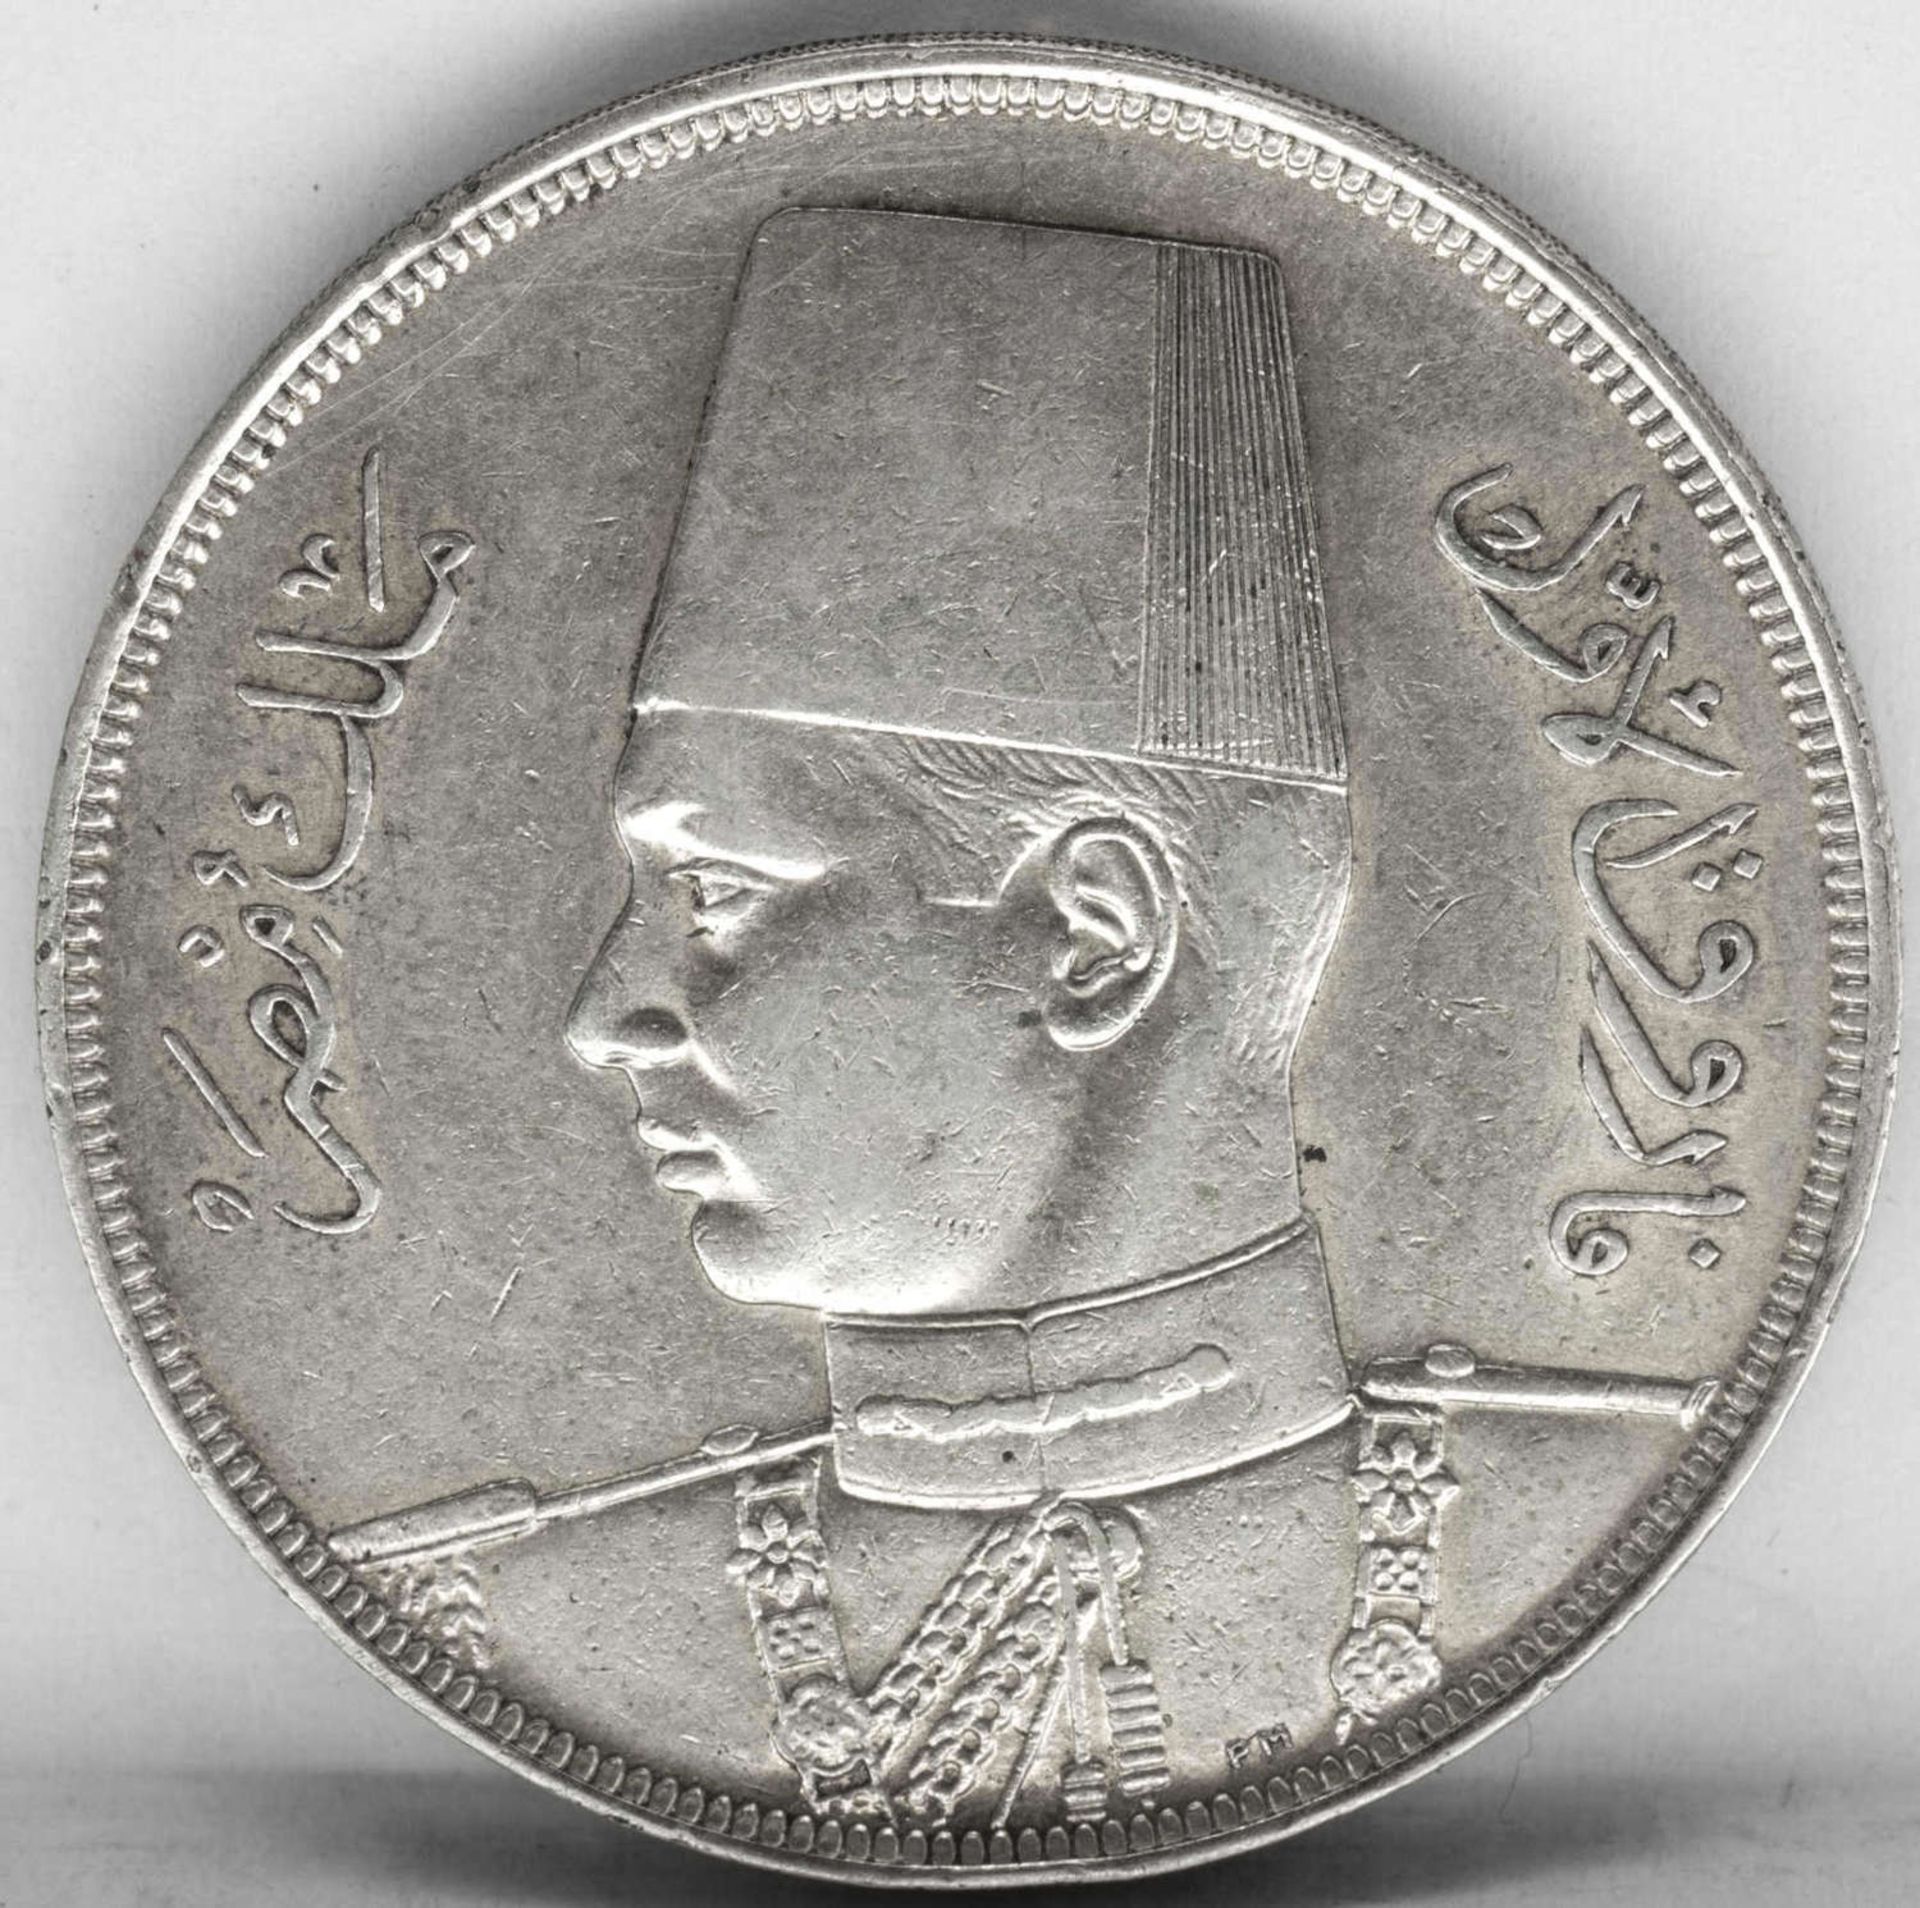 Ägypten 1937, 20 Piaster - Silbermünze "Farouk". Gewicht: ca. 28 g. Erhaltung: ss.